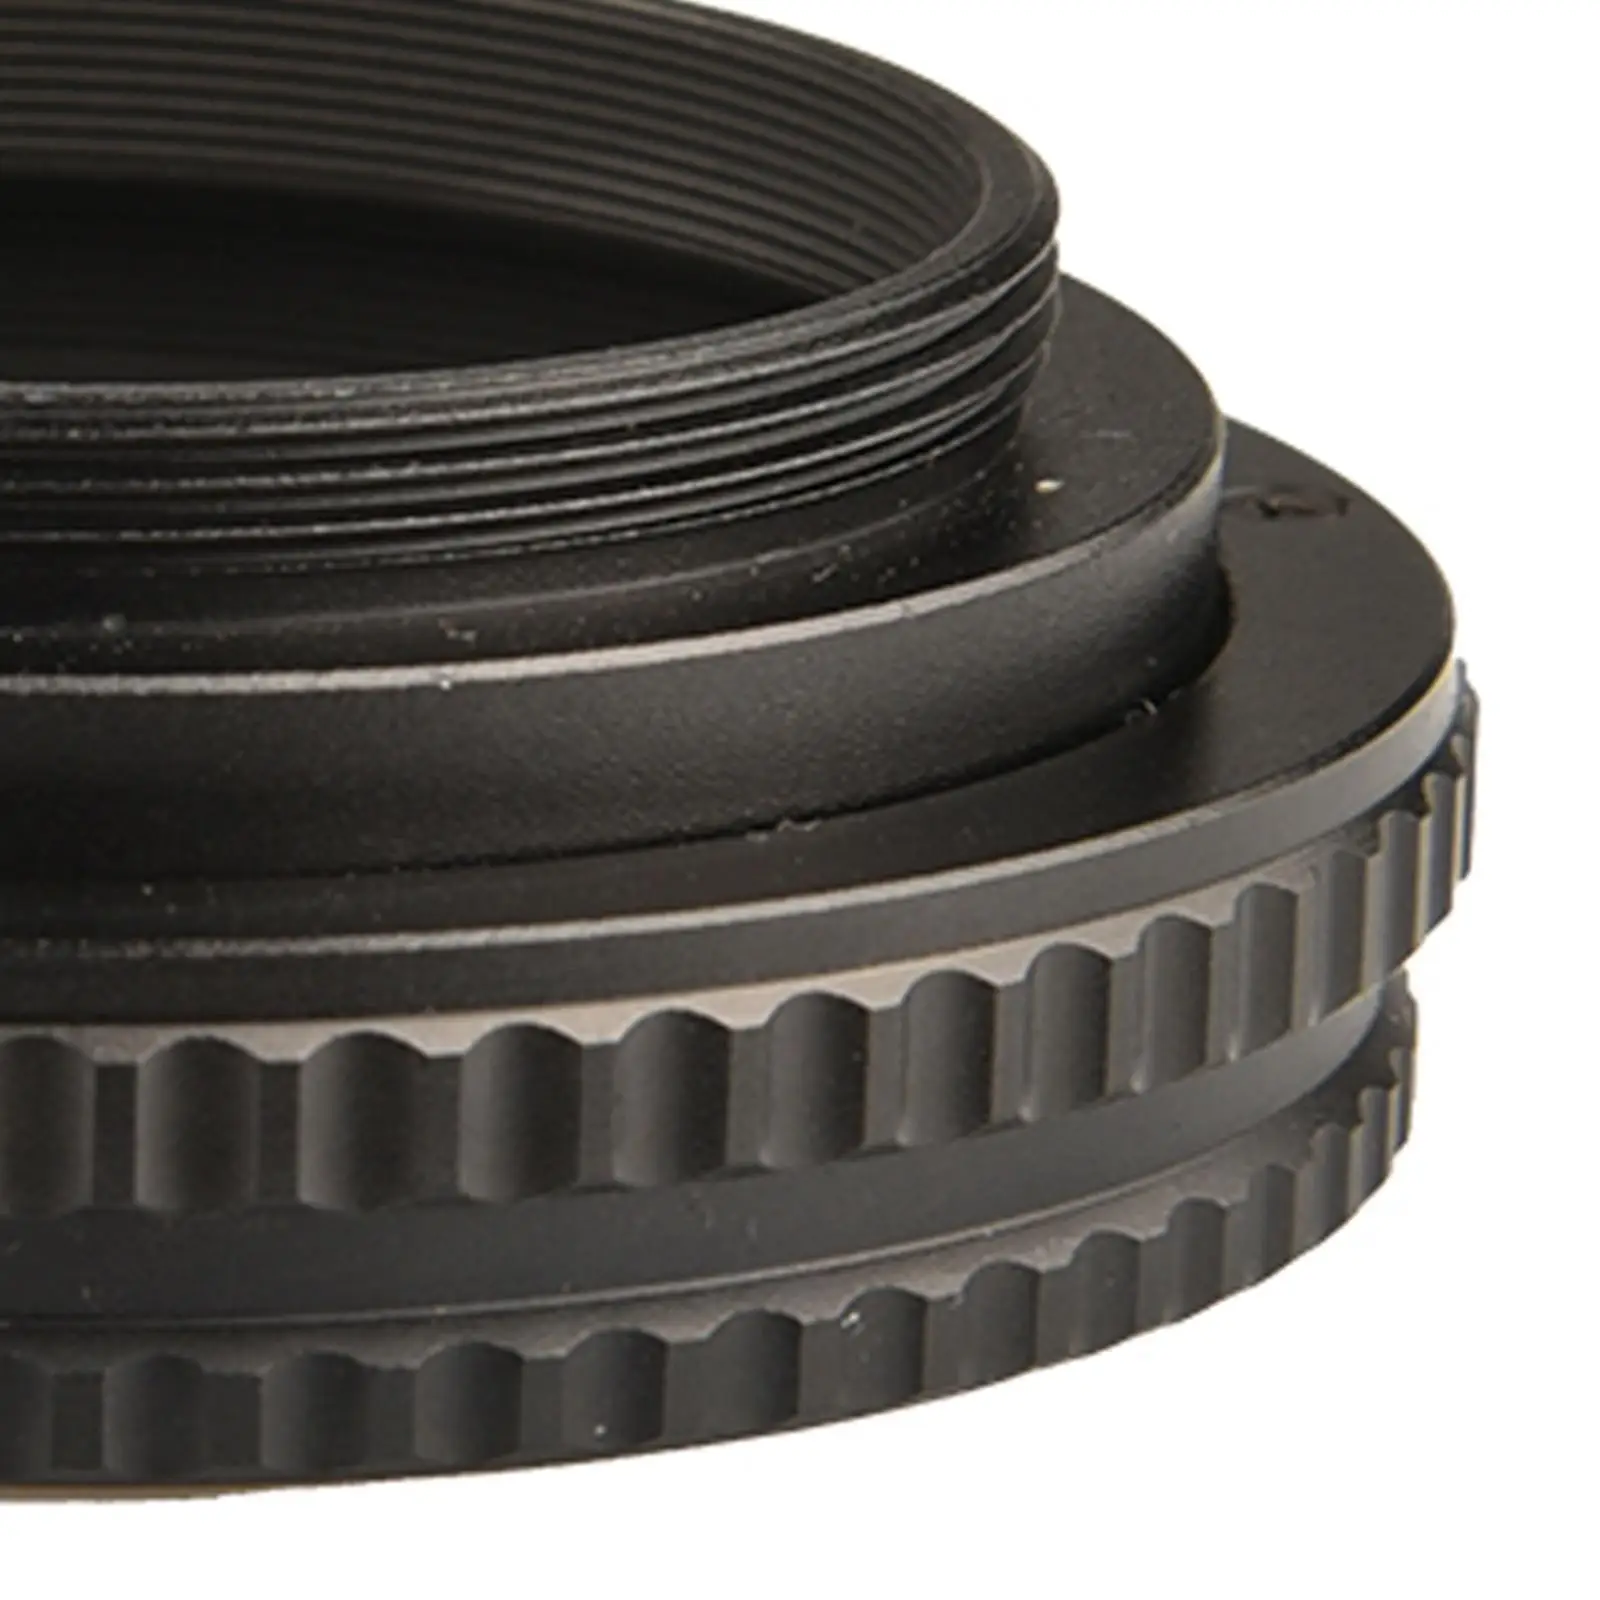 M42 2 Extension Tube Adapter Ring,  Installation Standard M42 Mount Adjustable Focusing Manually Focus for DSLR Film